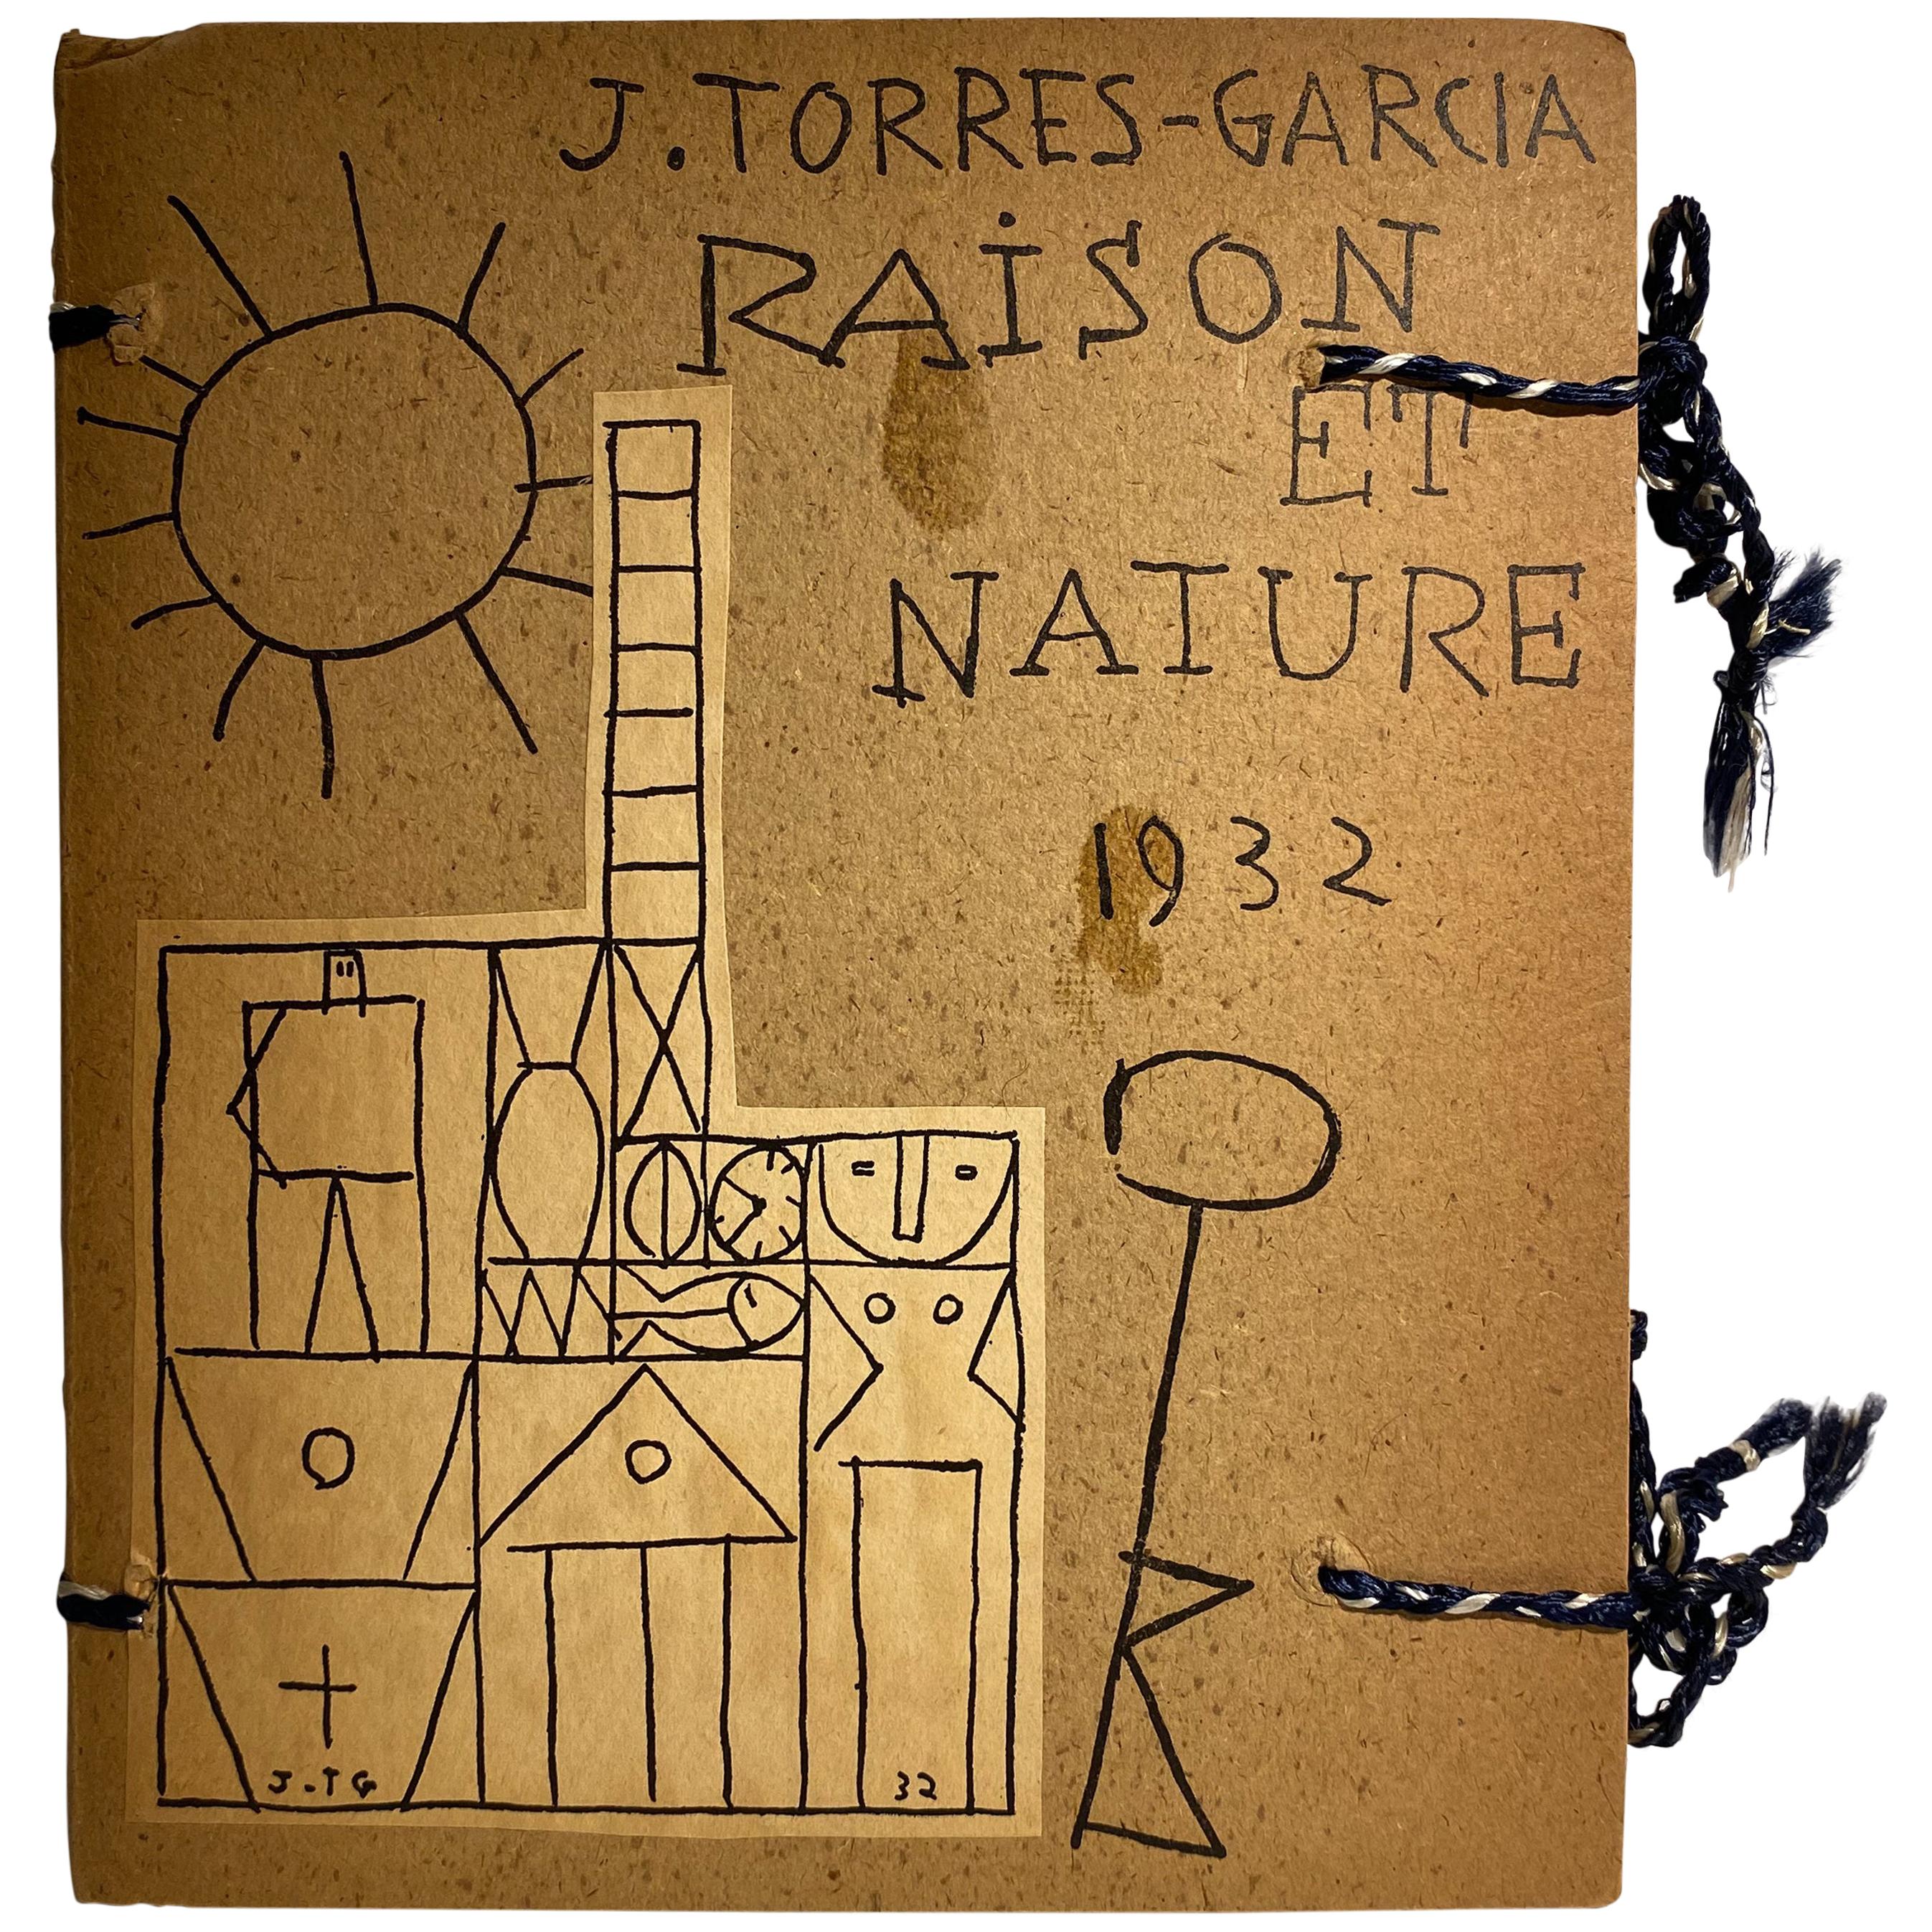 Joaquin Torres-Garcia Artist's Book "Raison et Nature"